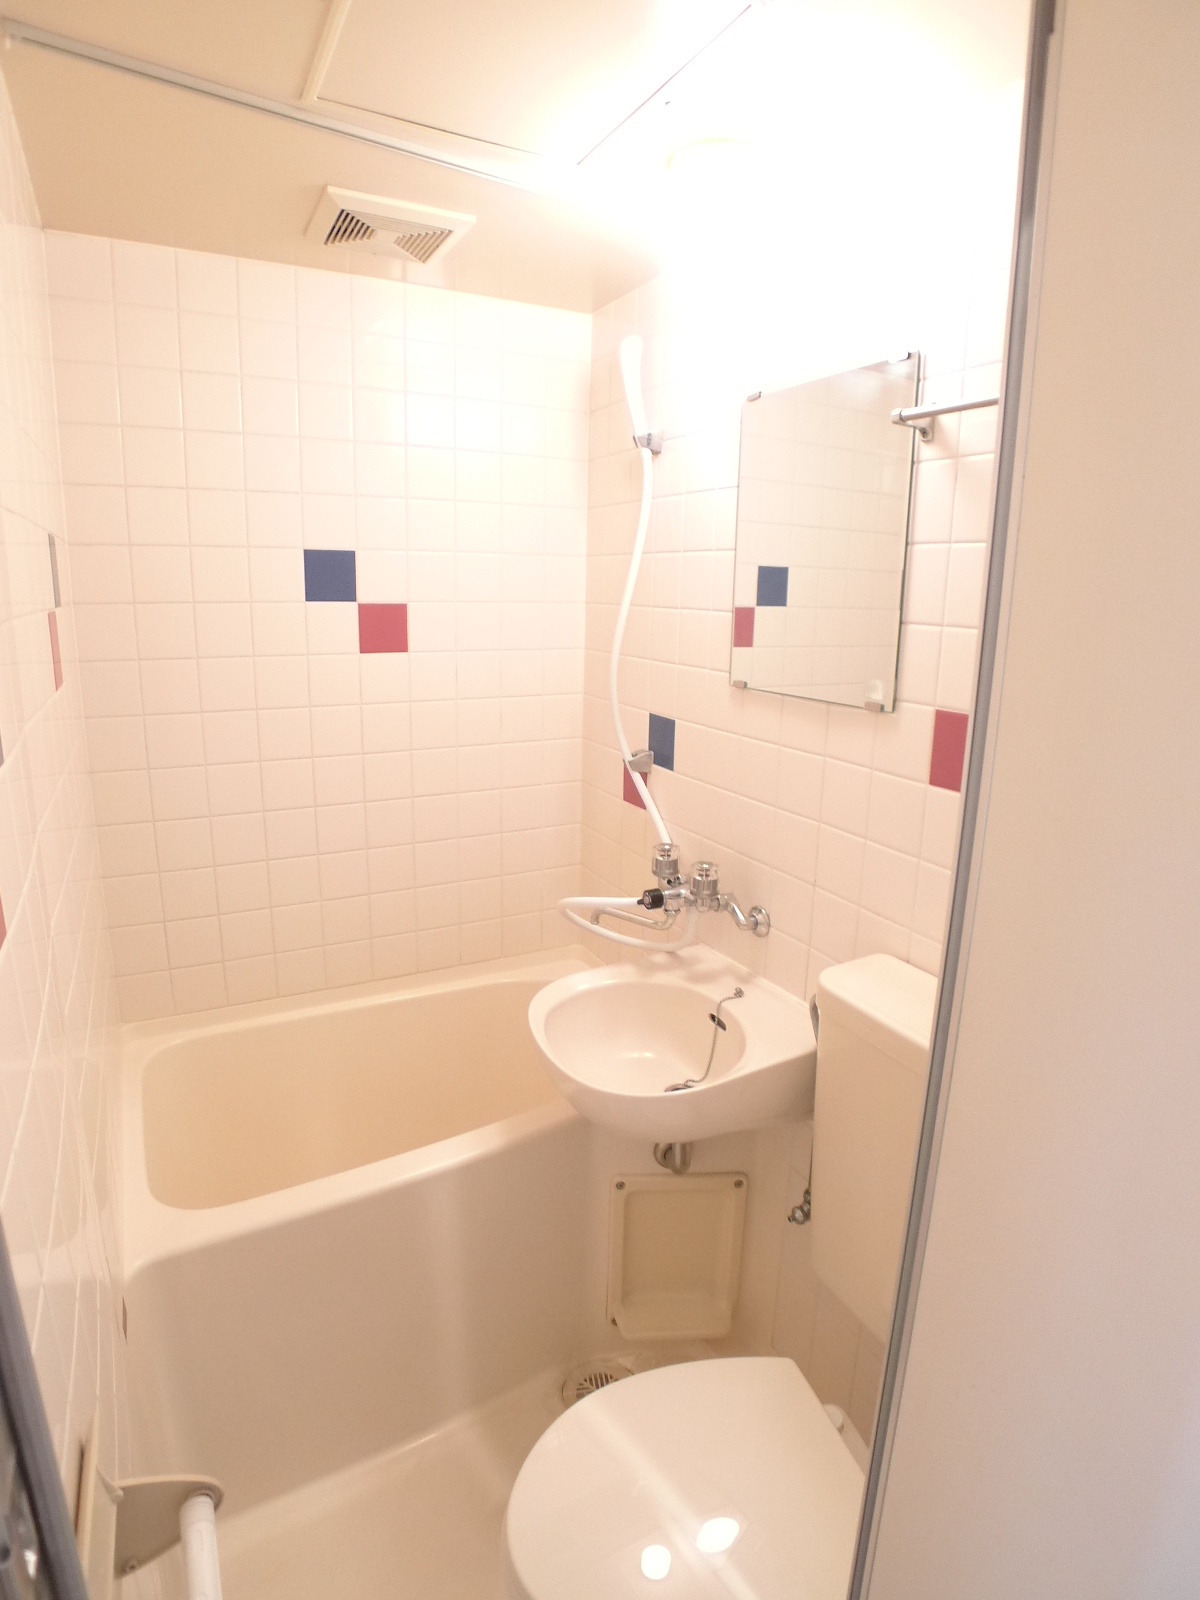 Bath. 2013 202, Room shooting